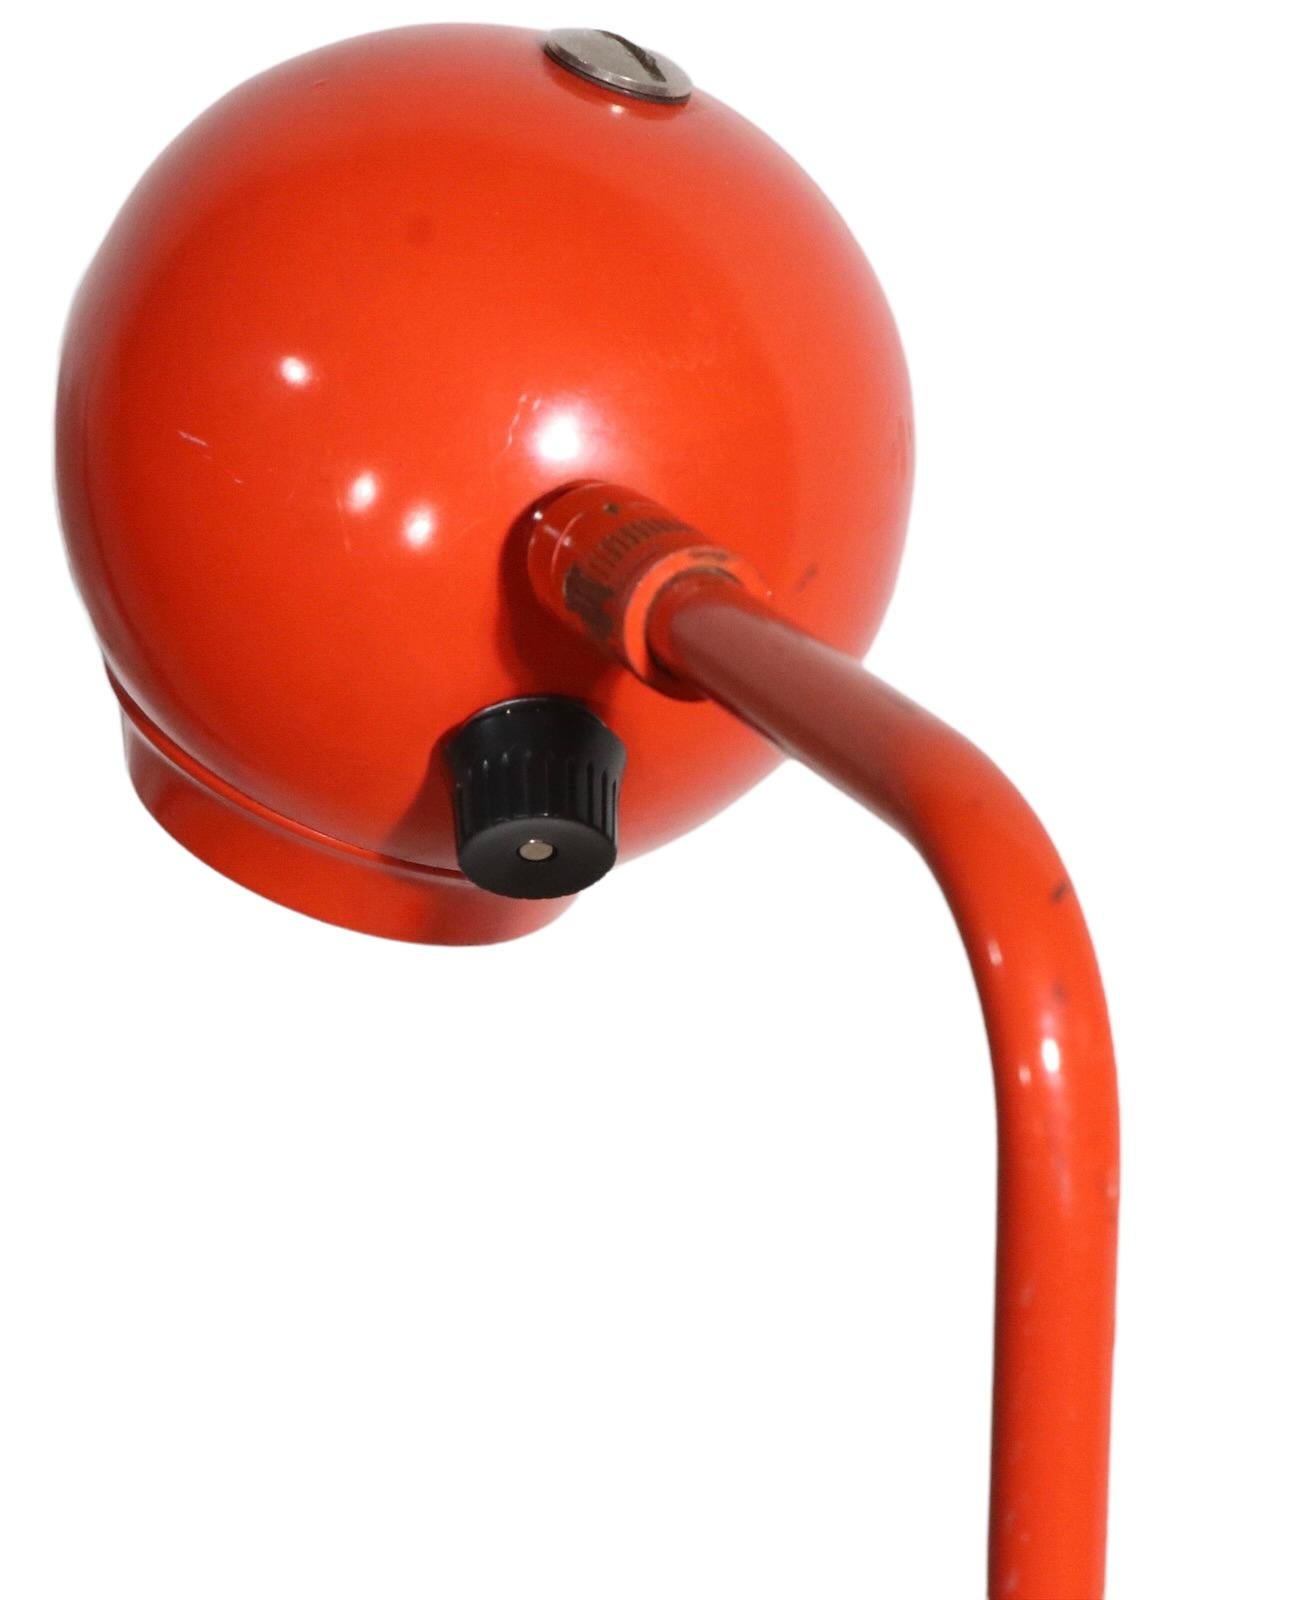 North American Robert Sonneman for George Kovacs Eyeball Floor Lamp in Orange Finish c 1970's For Sale